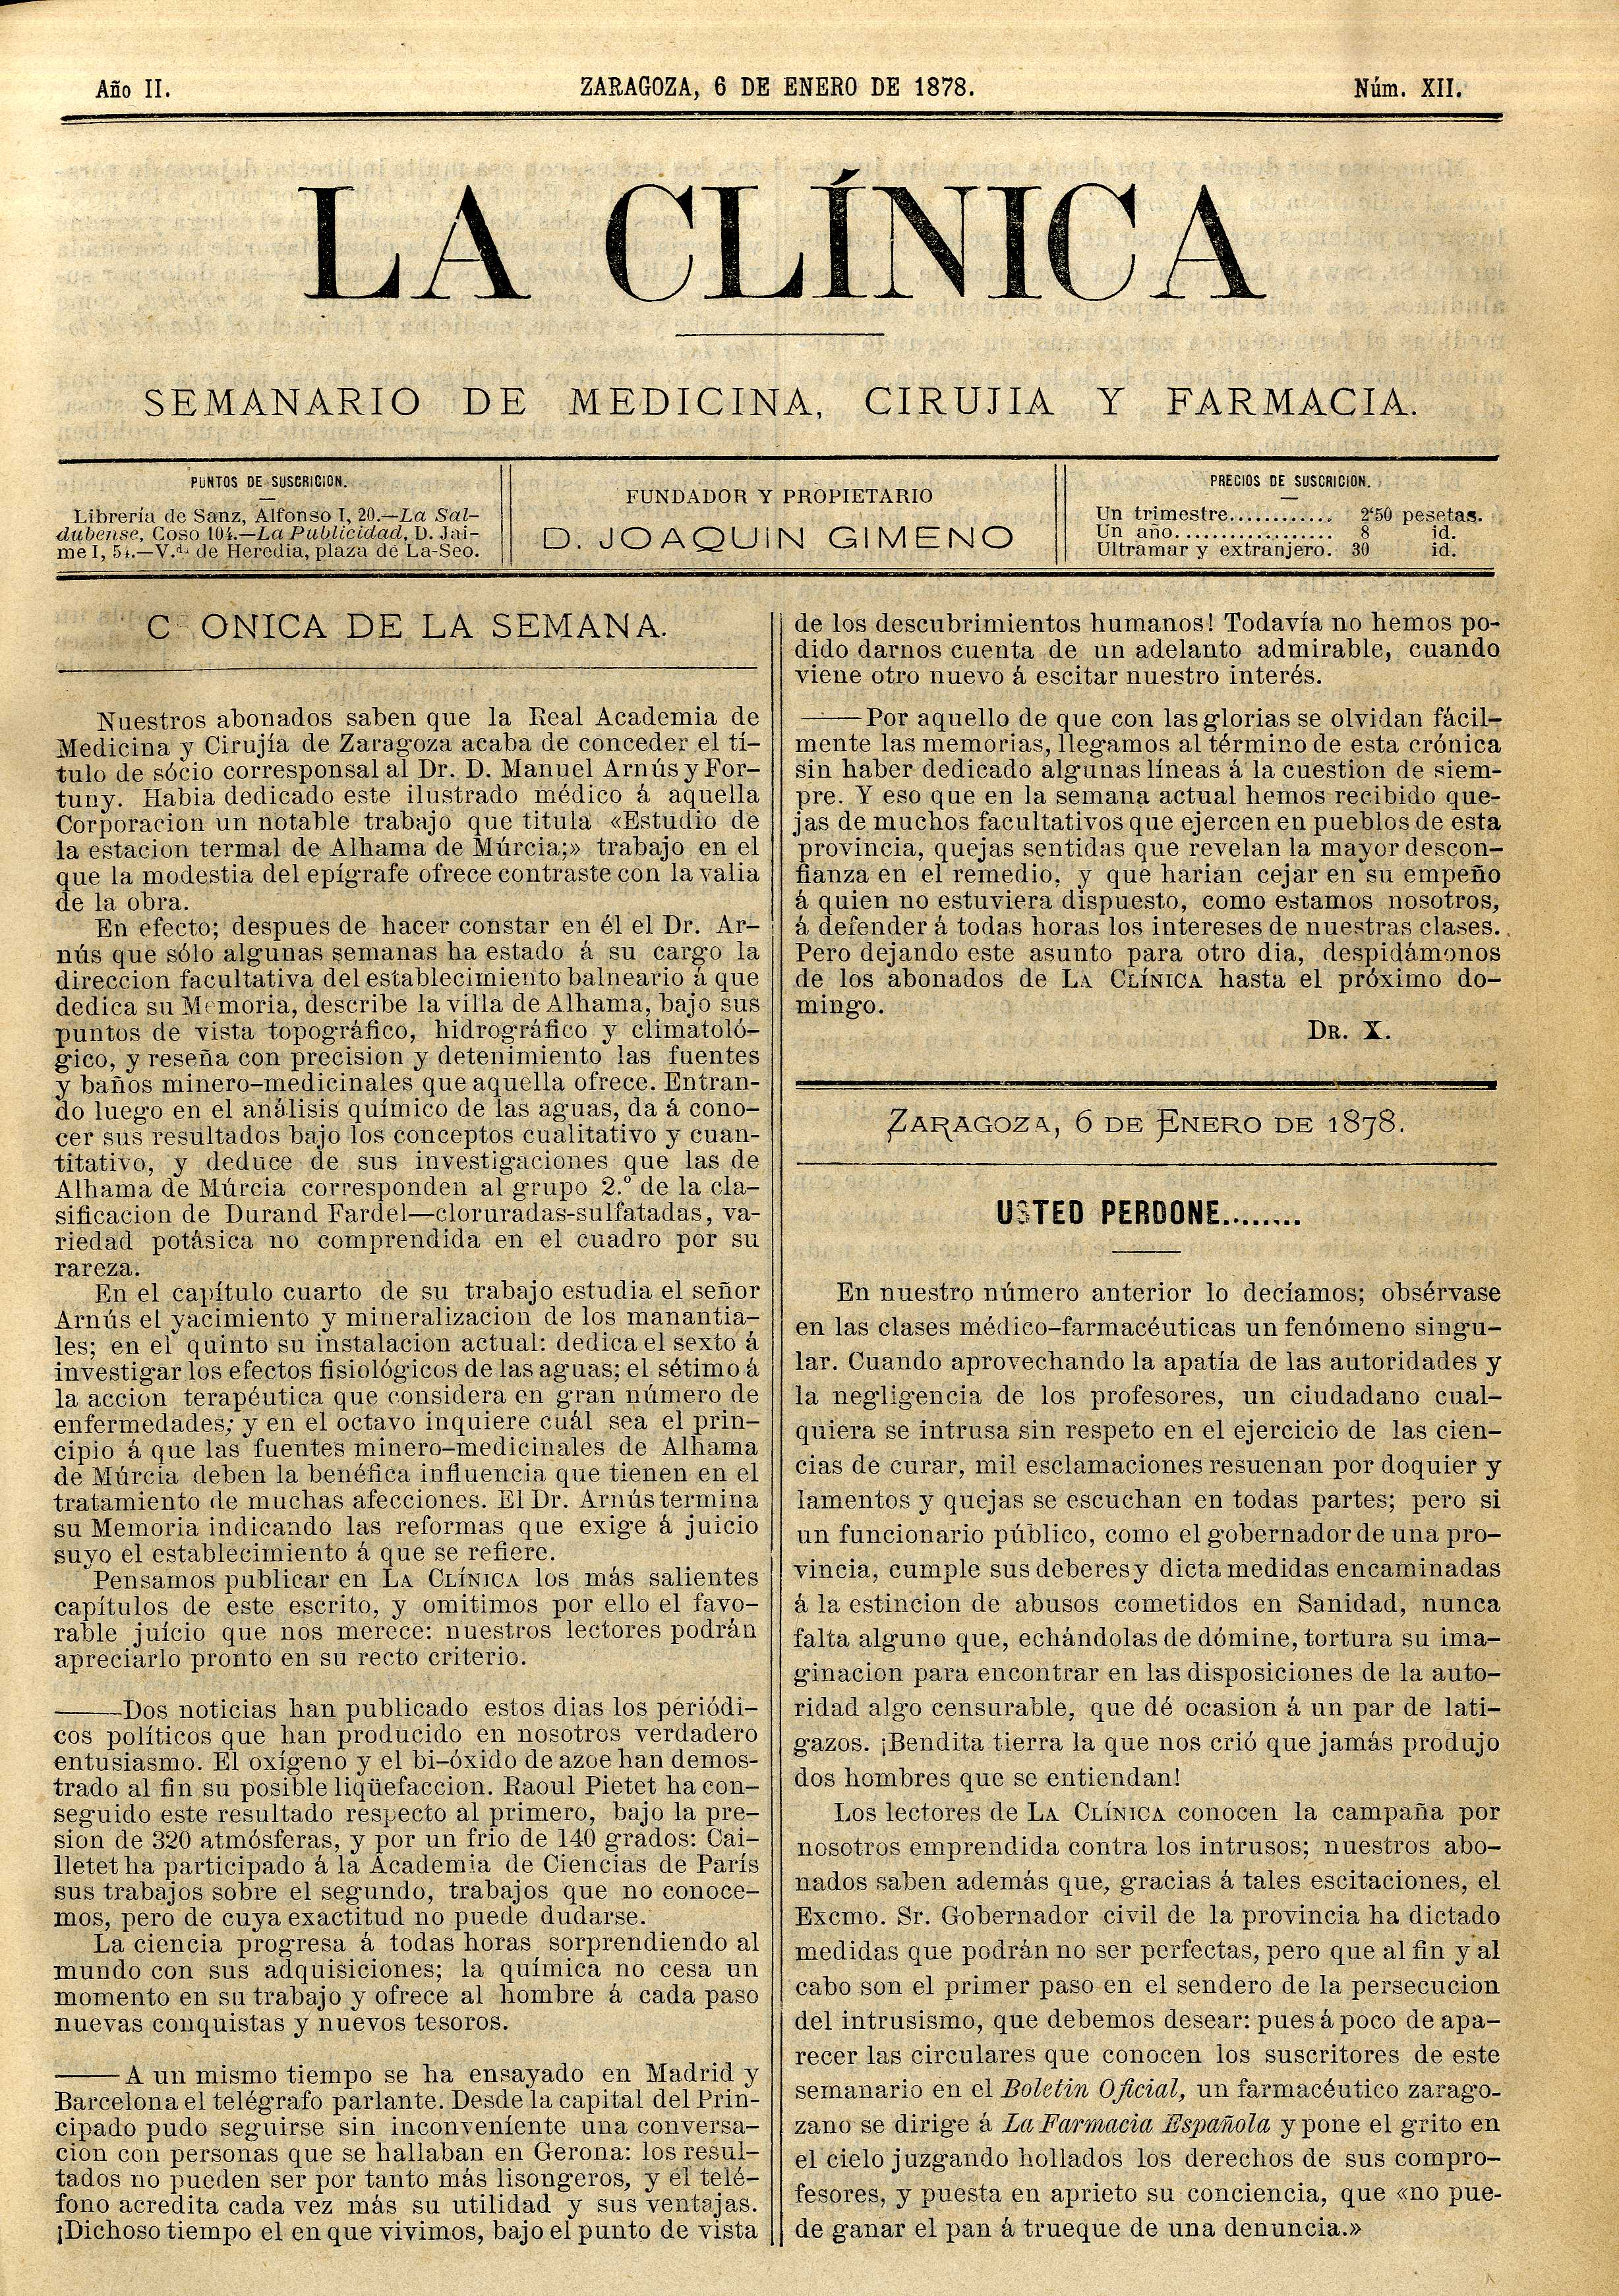 La Clínica (Zaragoza), II (1878)